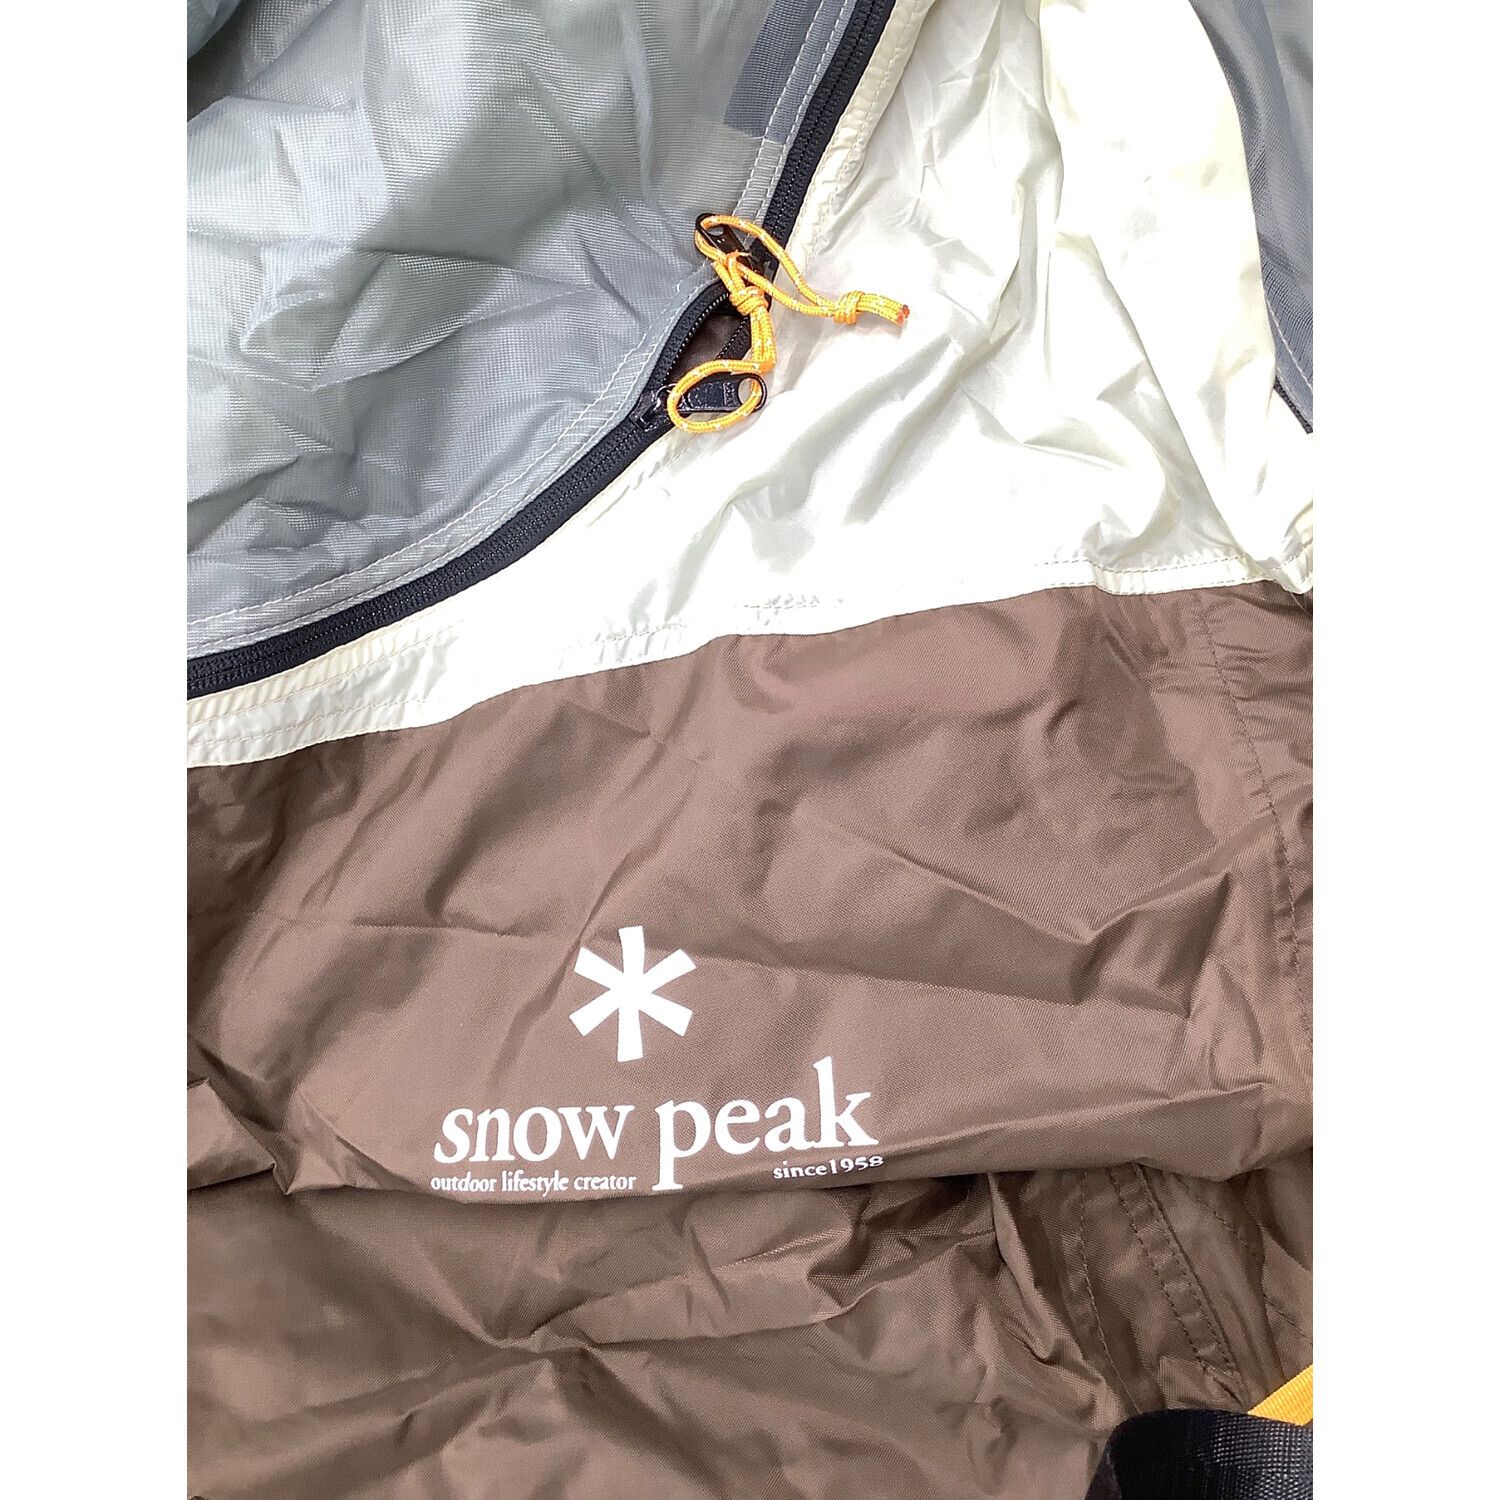 Snow peak (スノーピーク) エルフィールドデュオ 廃盤 SDX-002